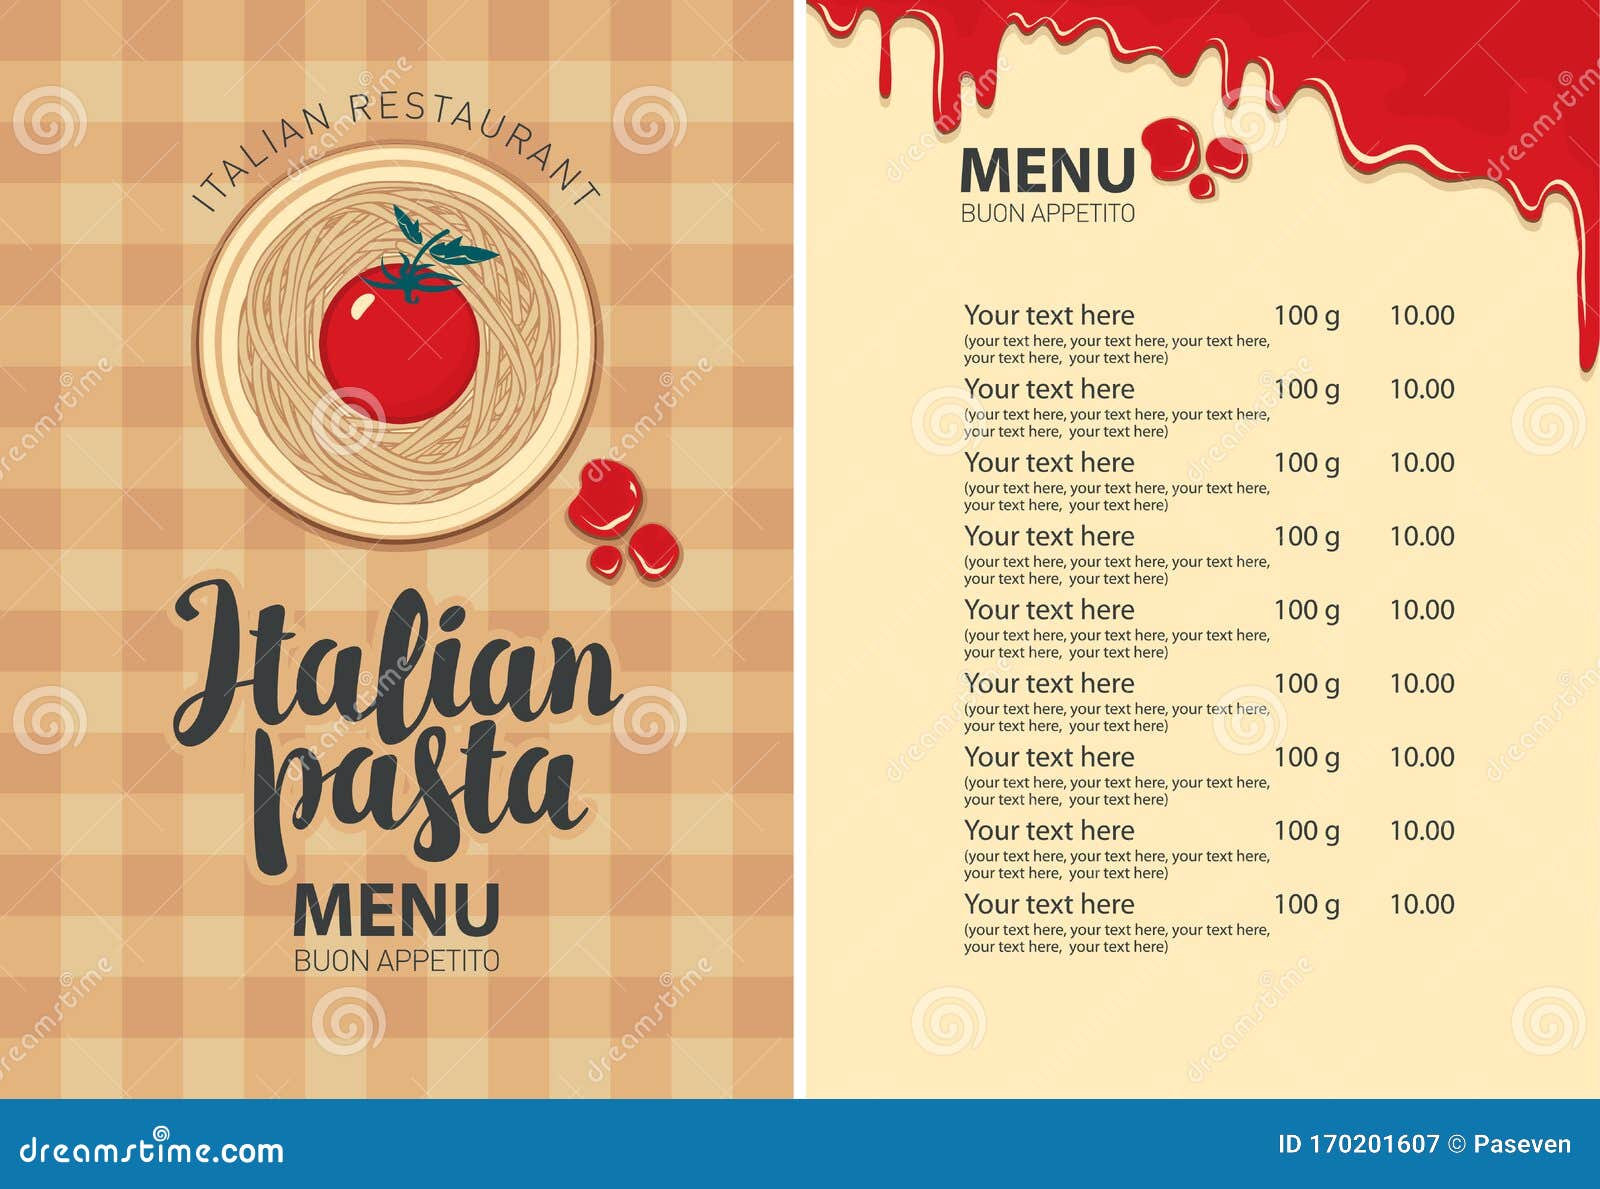 Pasta Menu for Italian Restaurant with Price List Stock Vector -  Illustration of tomato, label: 170201607